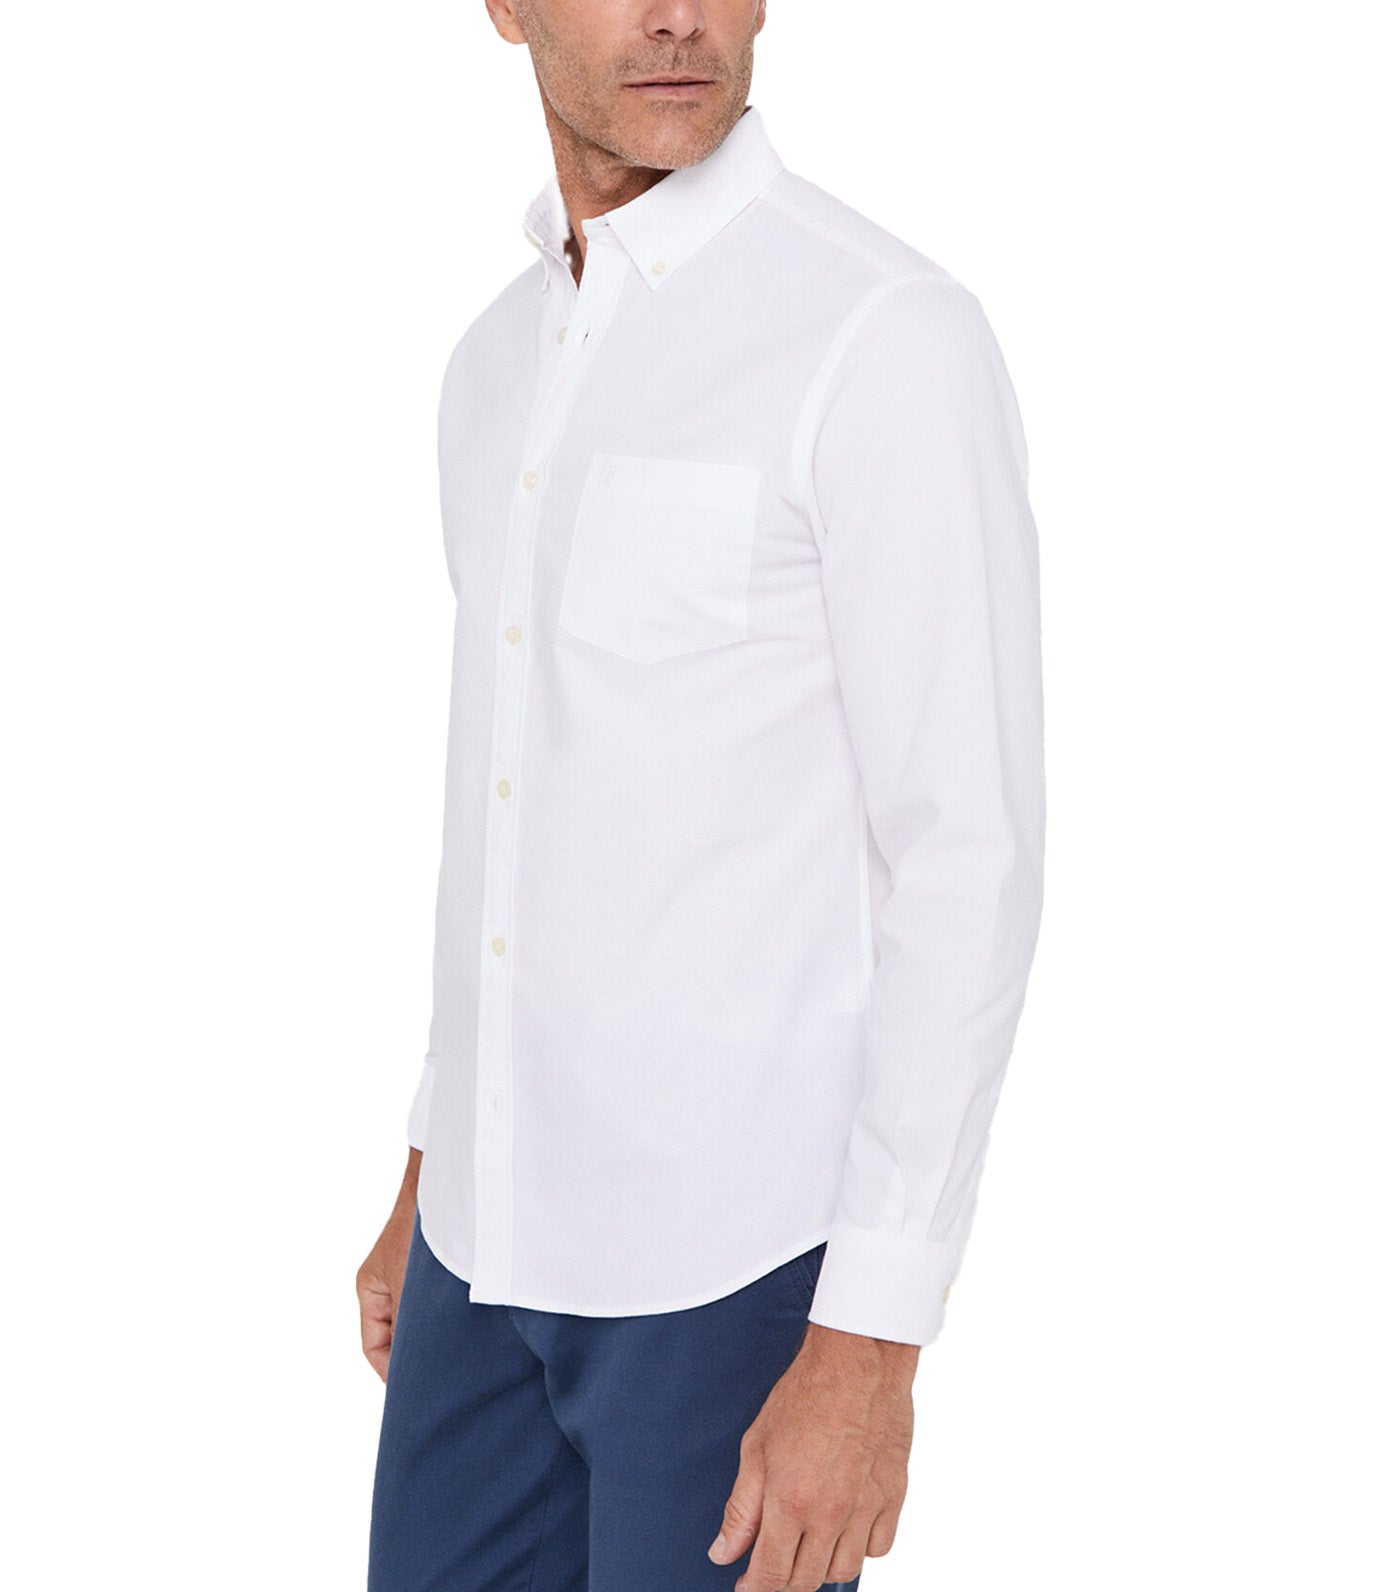 Plain Oxford Shirt White